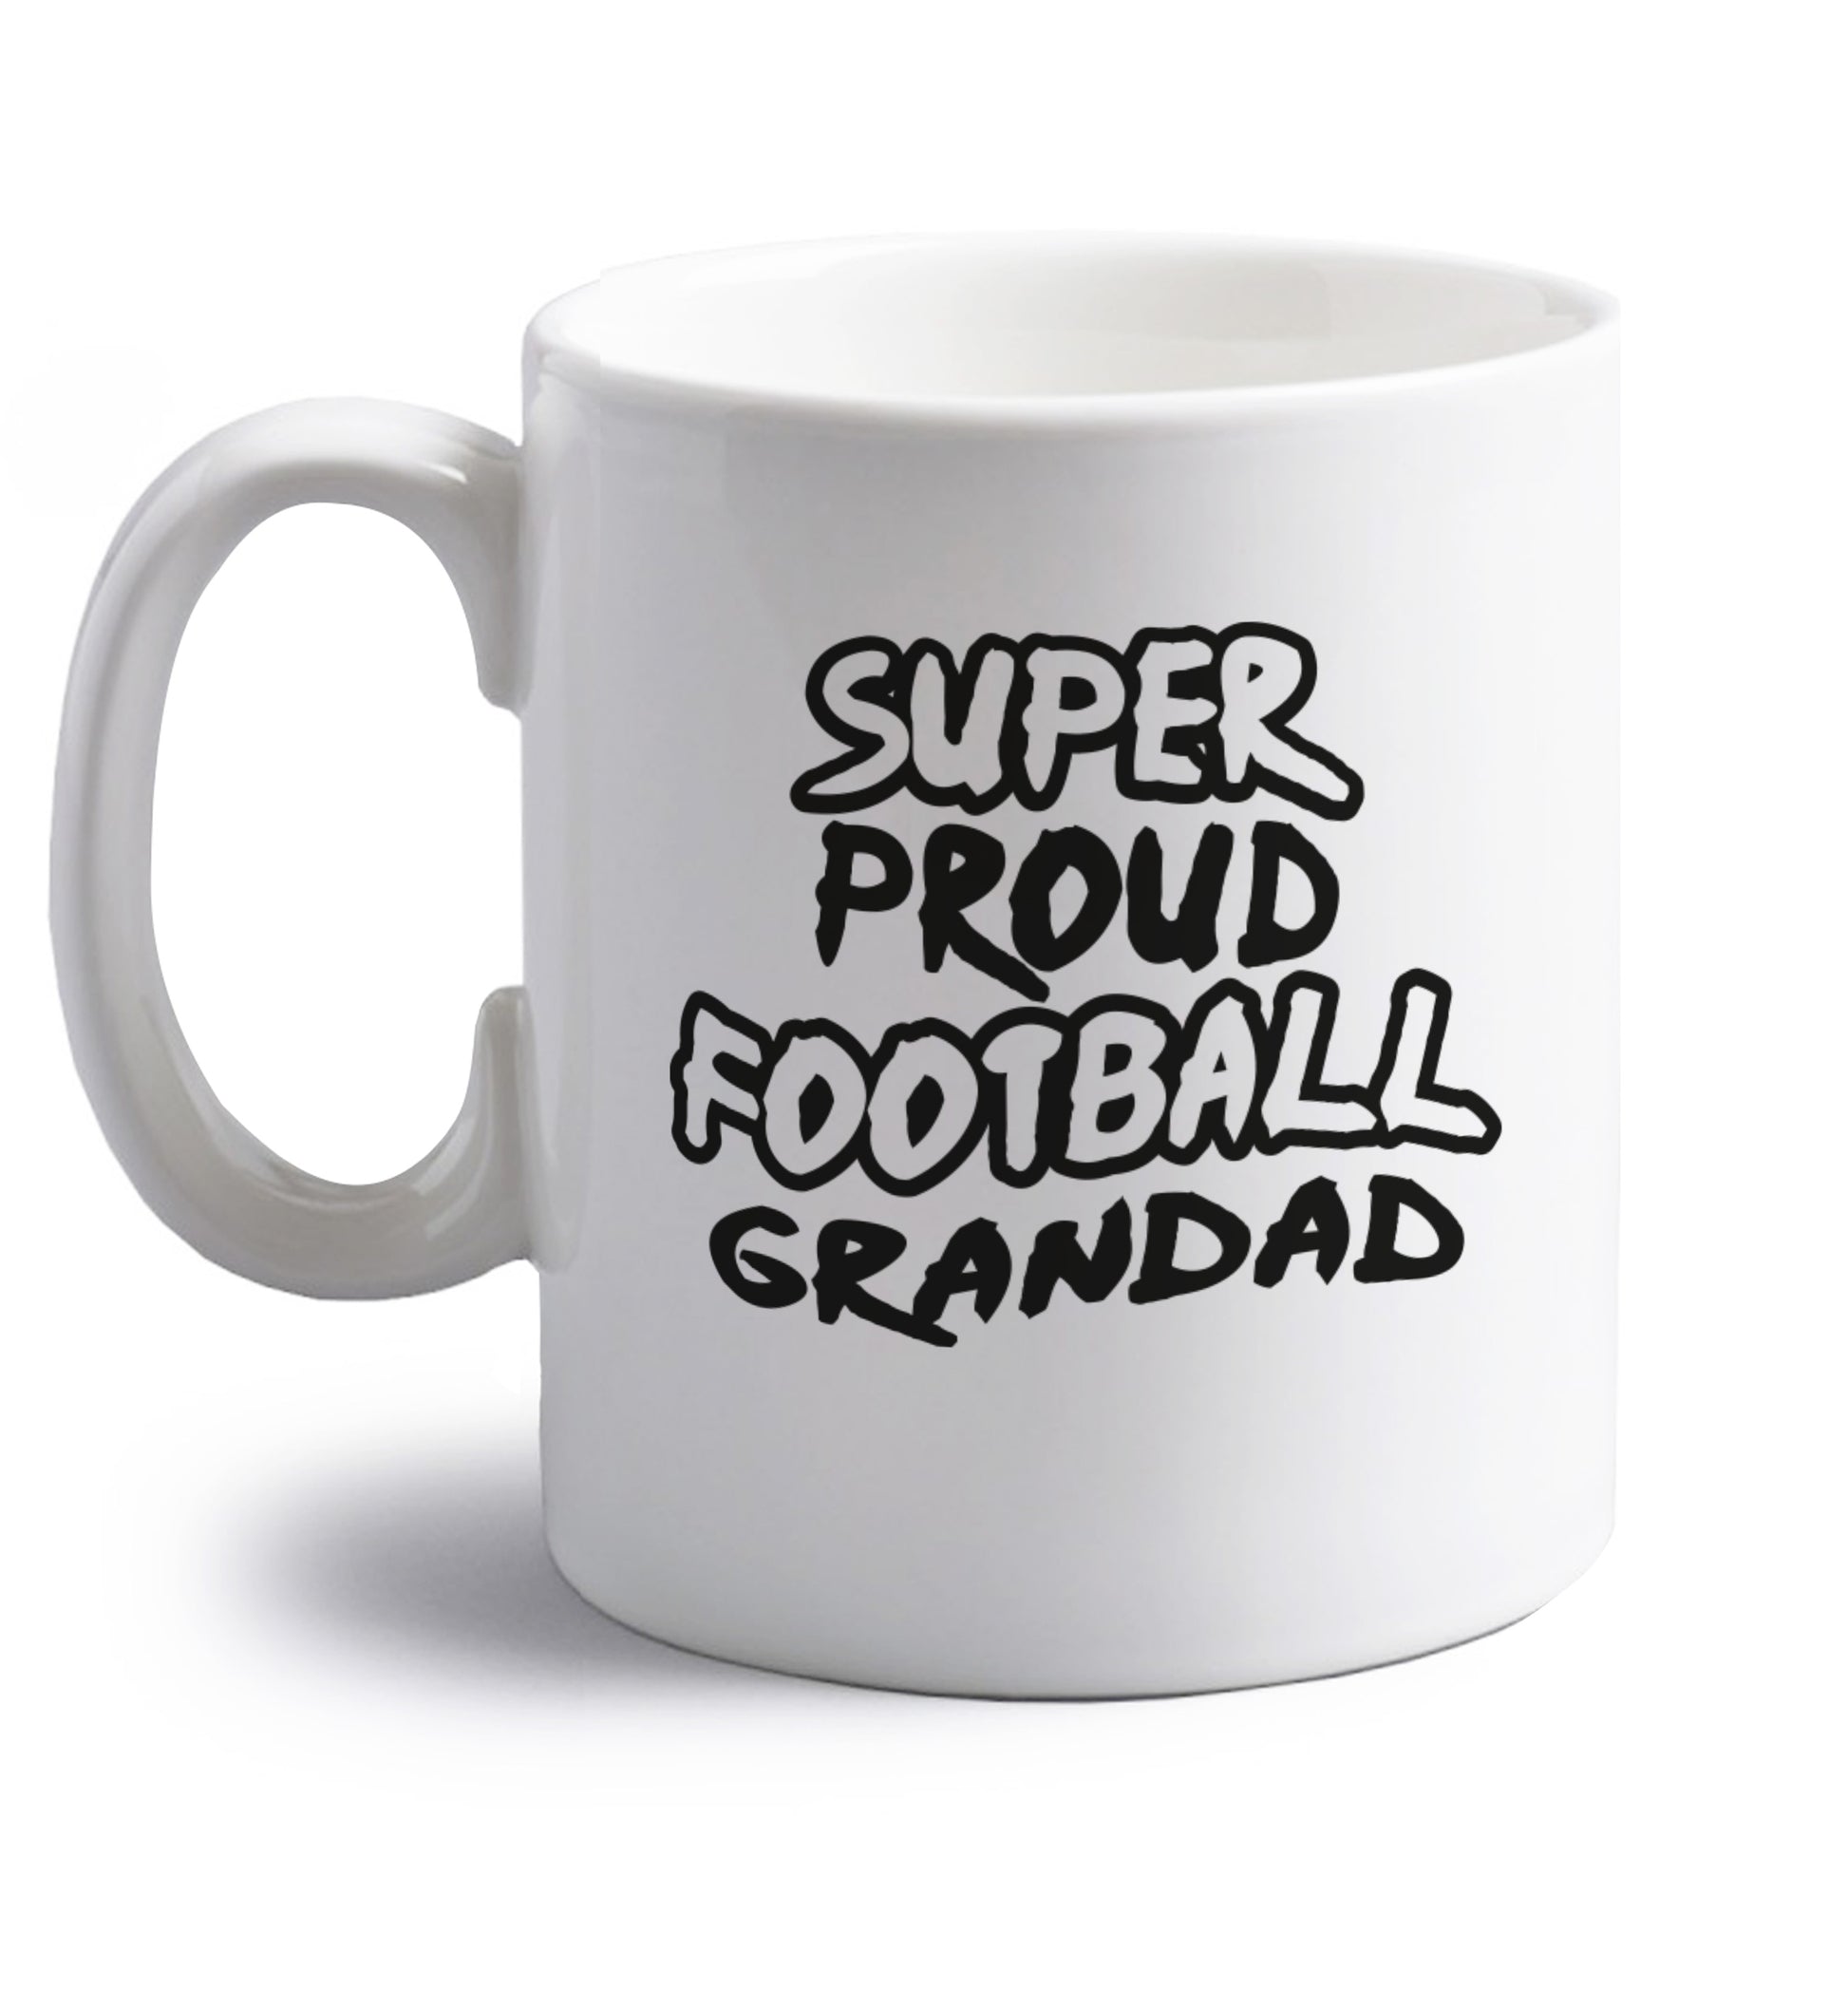 Super proud football grandad right handed white ceramic mug 